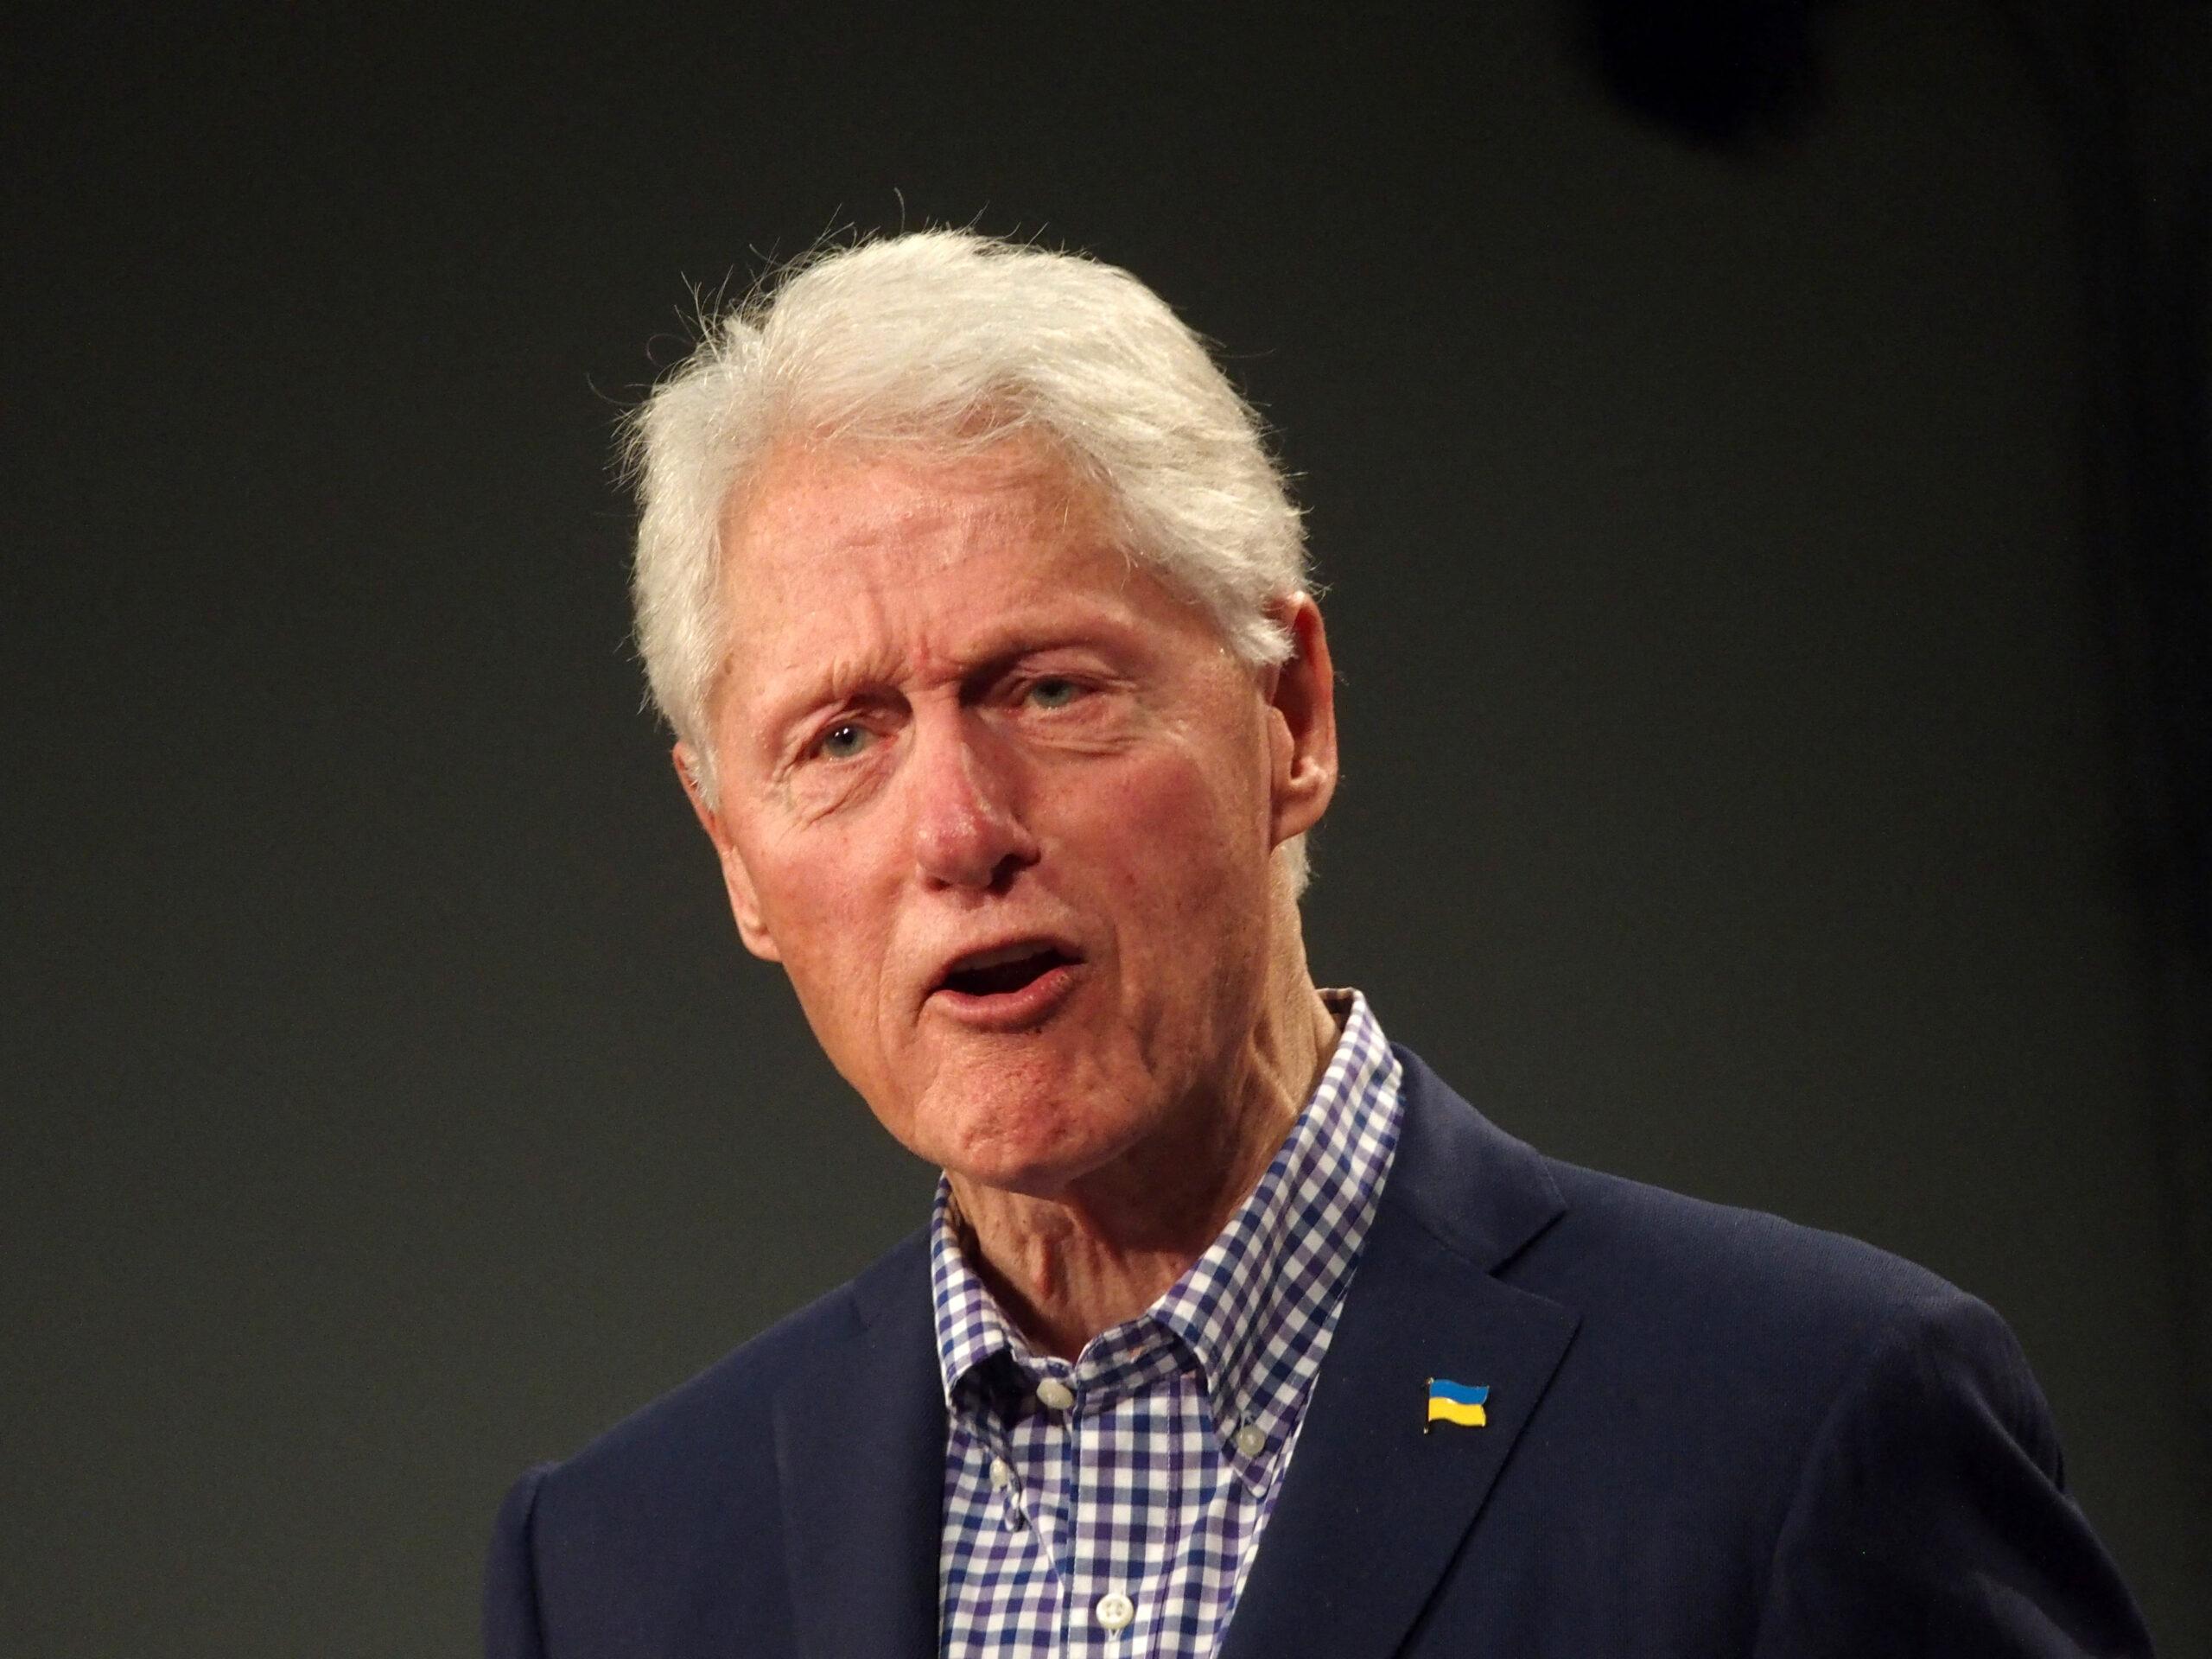 Bill Clinton Addressing Connection To Jeffrey Epstein Resurfaces